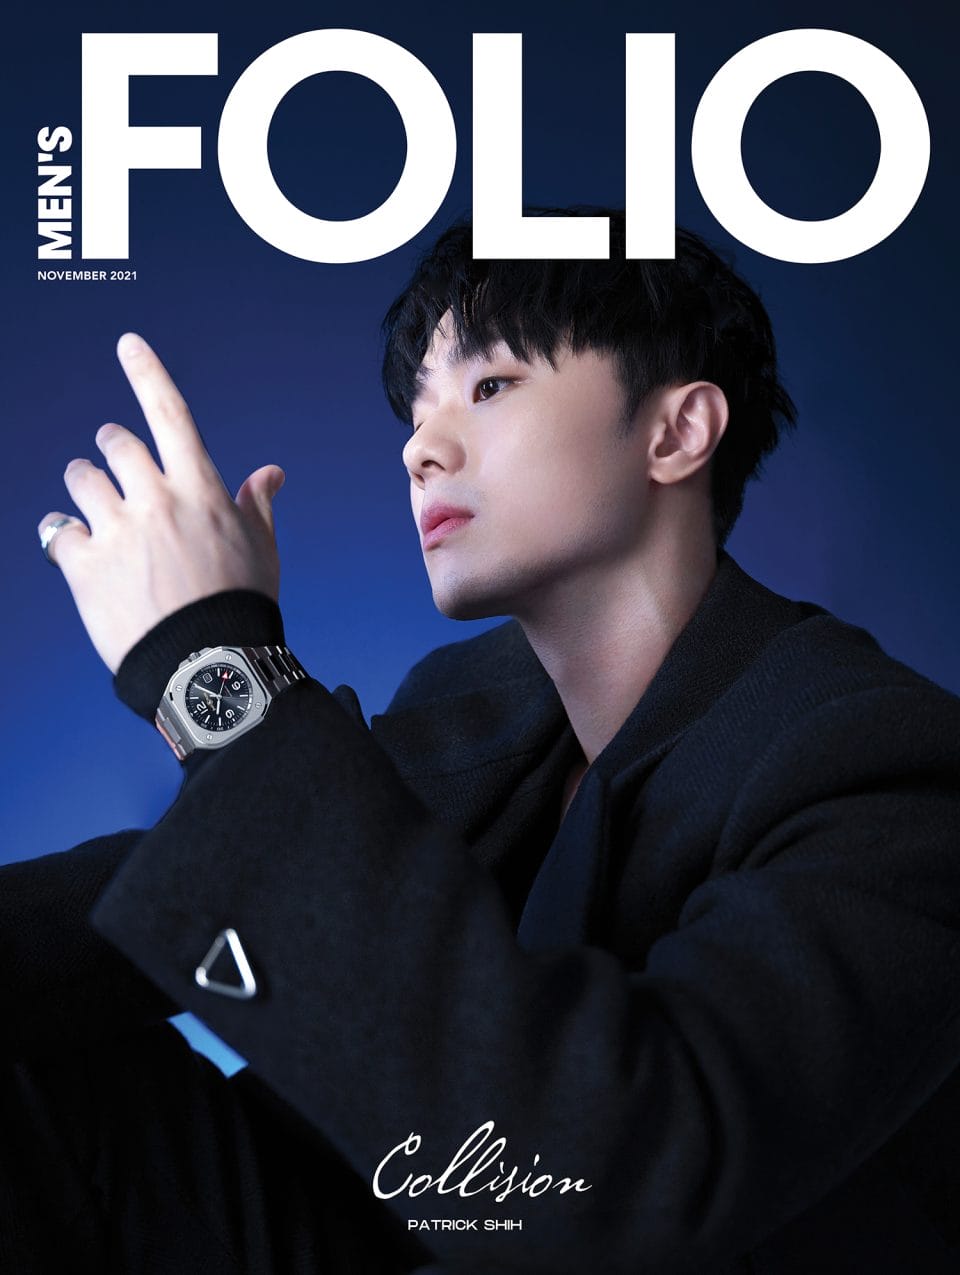 Introducing Patrick Shih 施柏宇, Cover Star of Men’s Folio November 2021